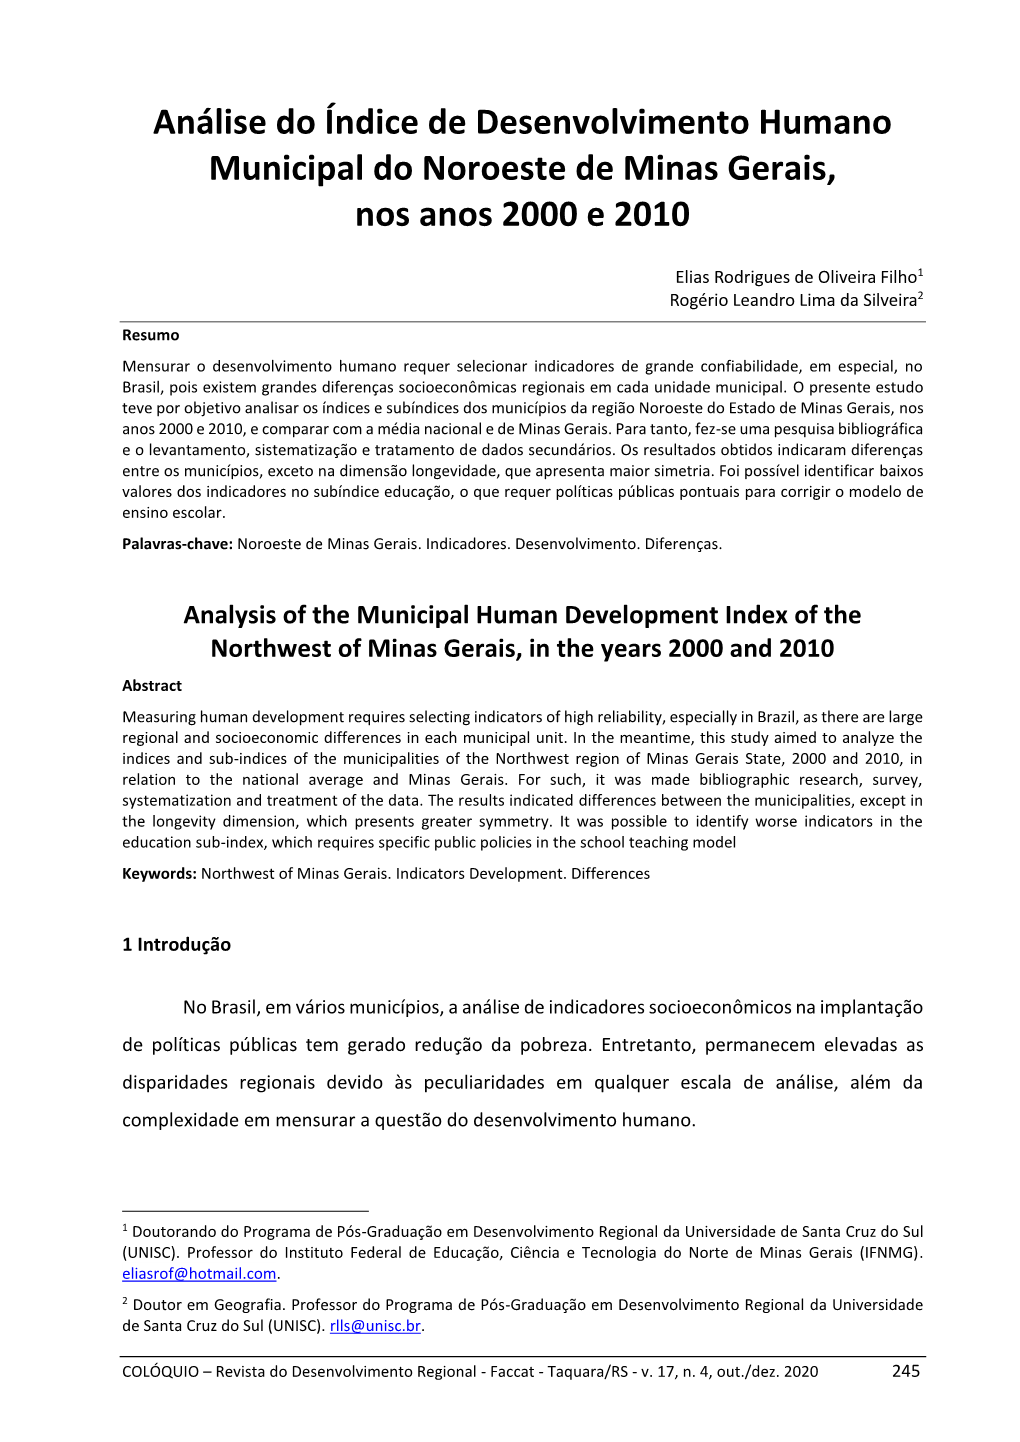 Análise Do Índice De Desenvolvimento Humano Municipal Do Noroeste De Minas Gerais, Nos Anos 2000 E 2010